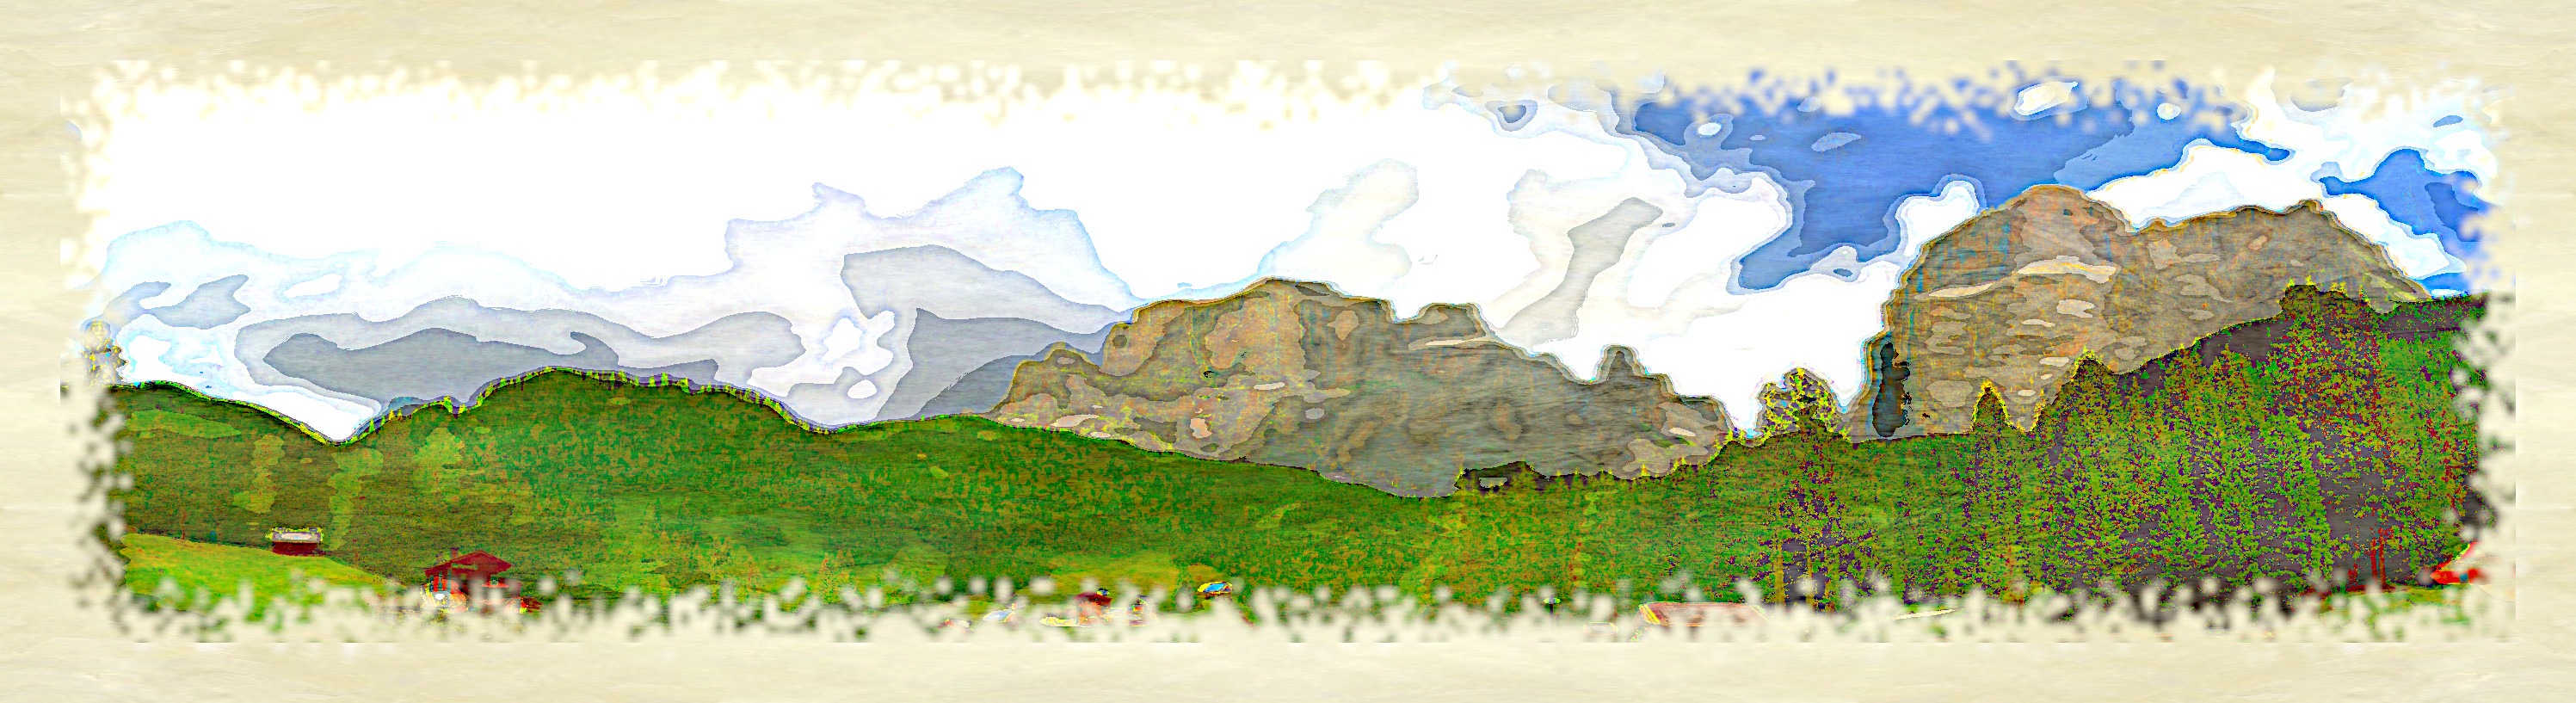 2019-04-01 10-24-39 Dolomiti_2012_Samsung_2012-07-07_SAM_0274_stitch as a simple aquarel, using 16 colours.jpg